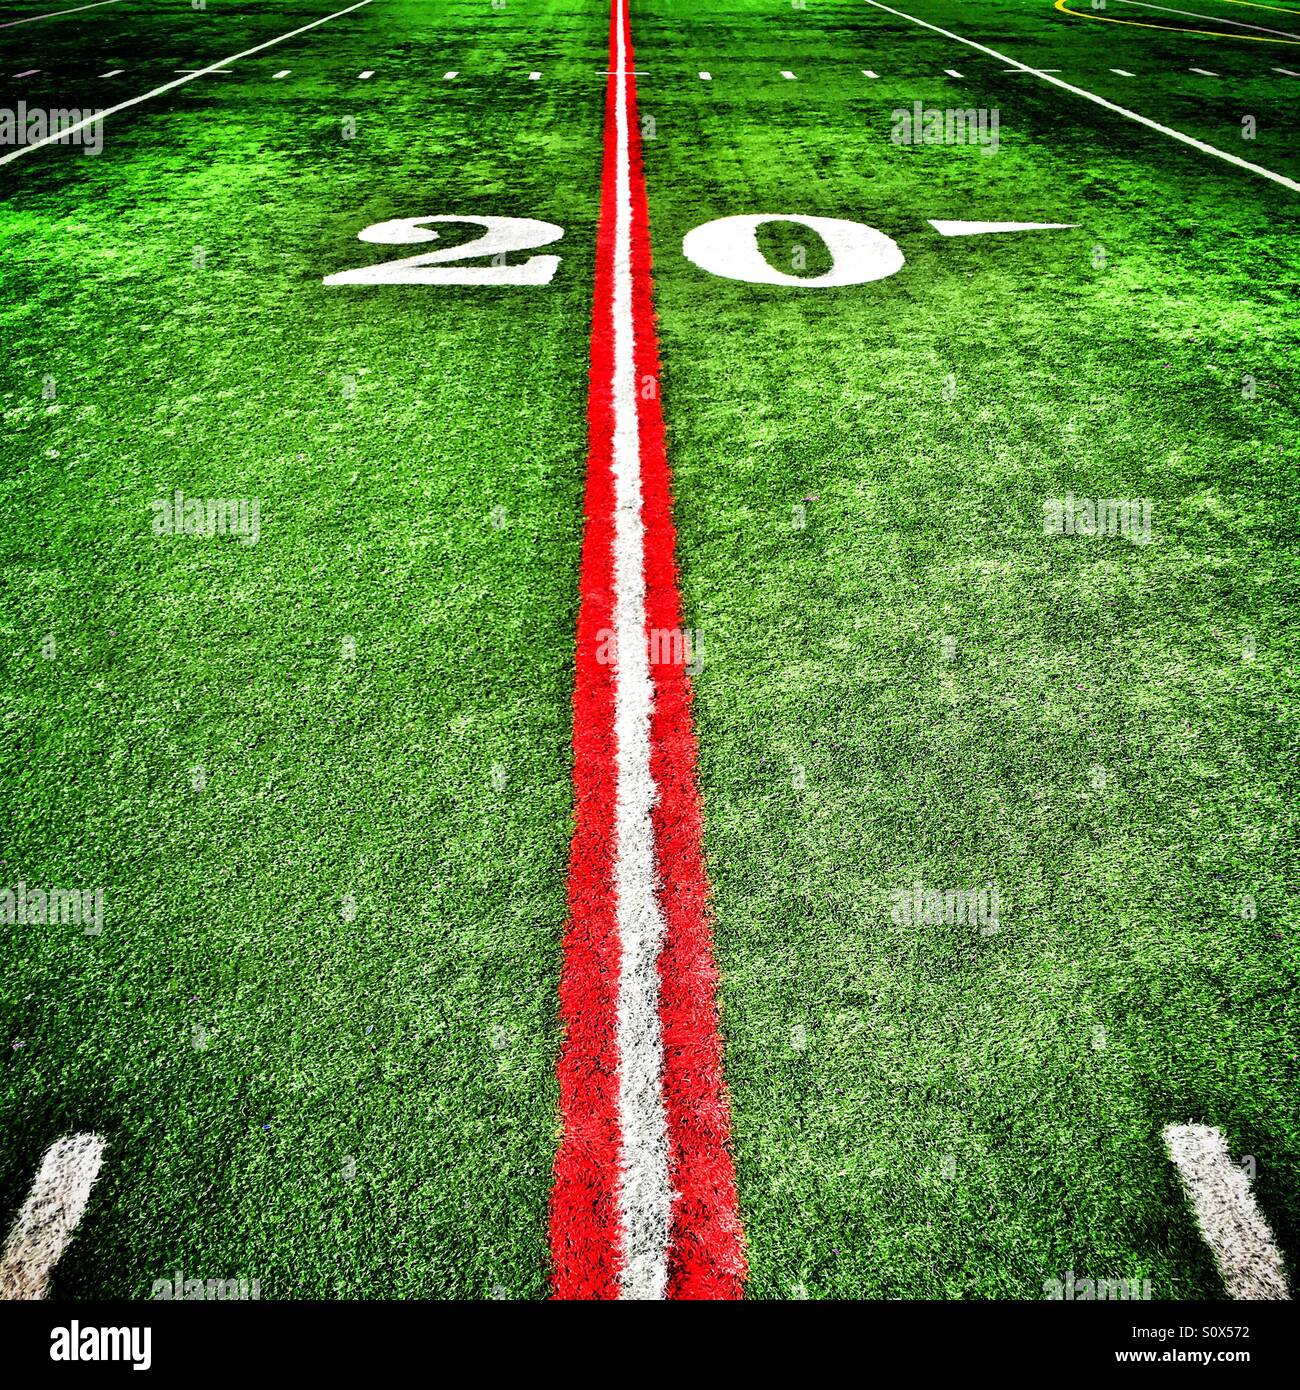 20-Yard-Linie auf einem American Football-Feld rot lackiert Stockfoto